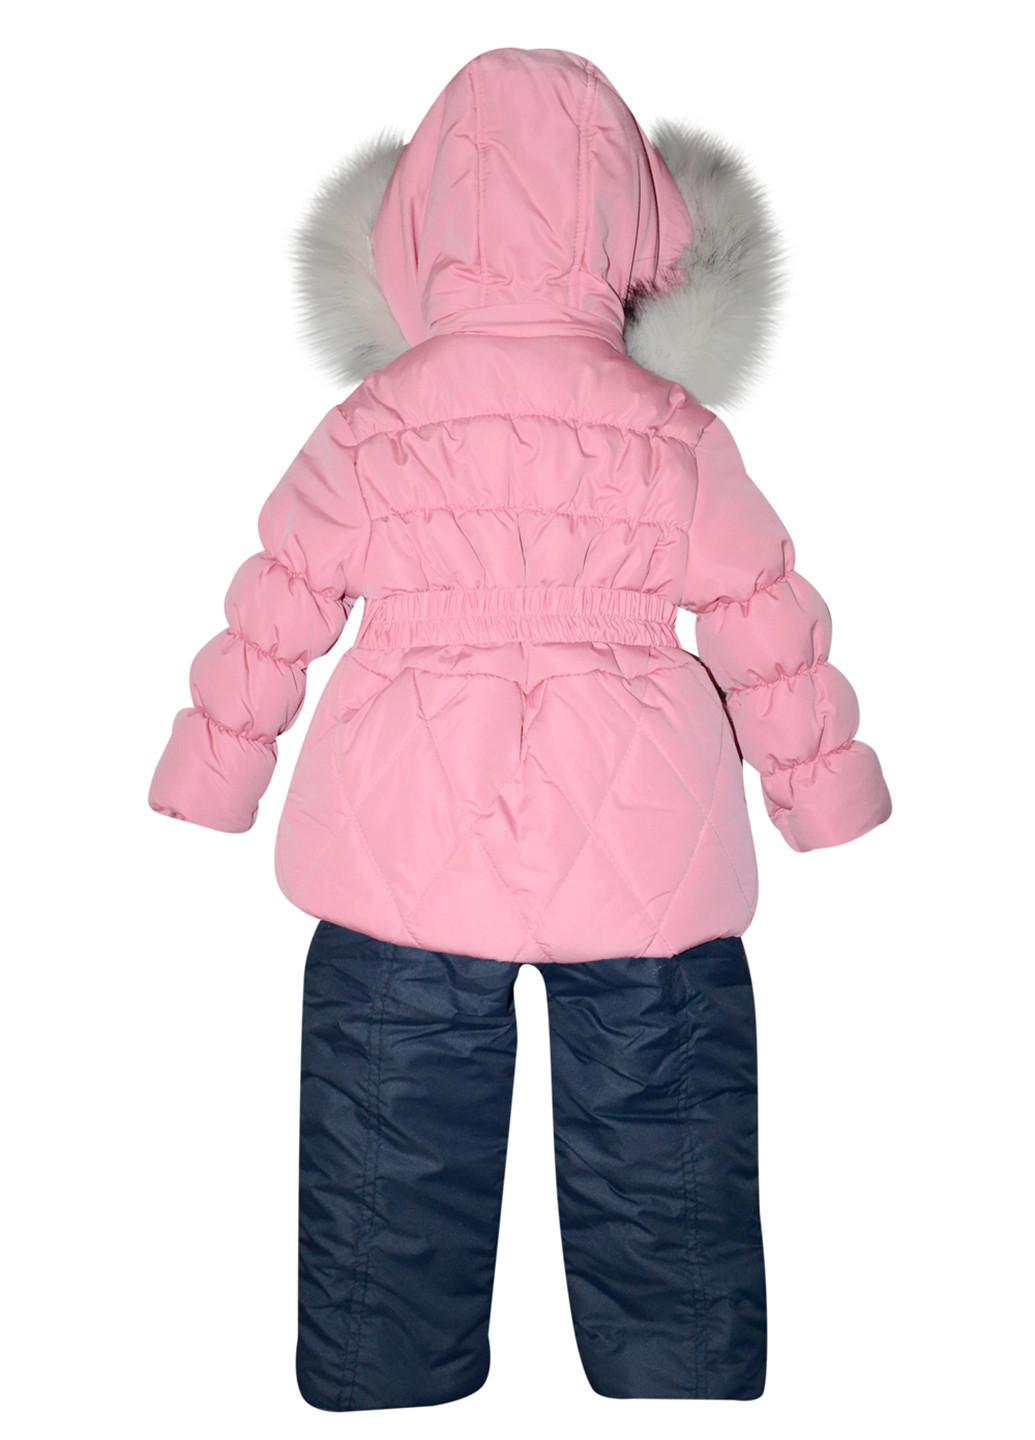 Розовый зимний комплект (куртка+полукомбинезон) Bambino